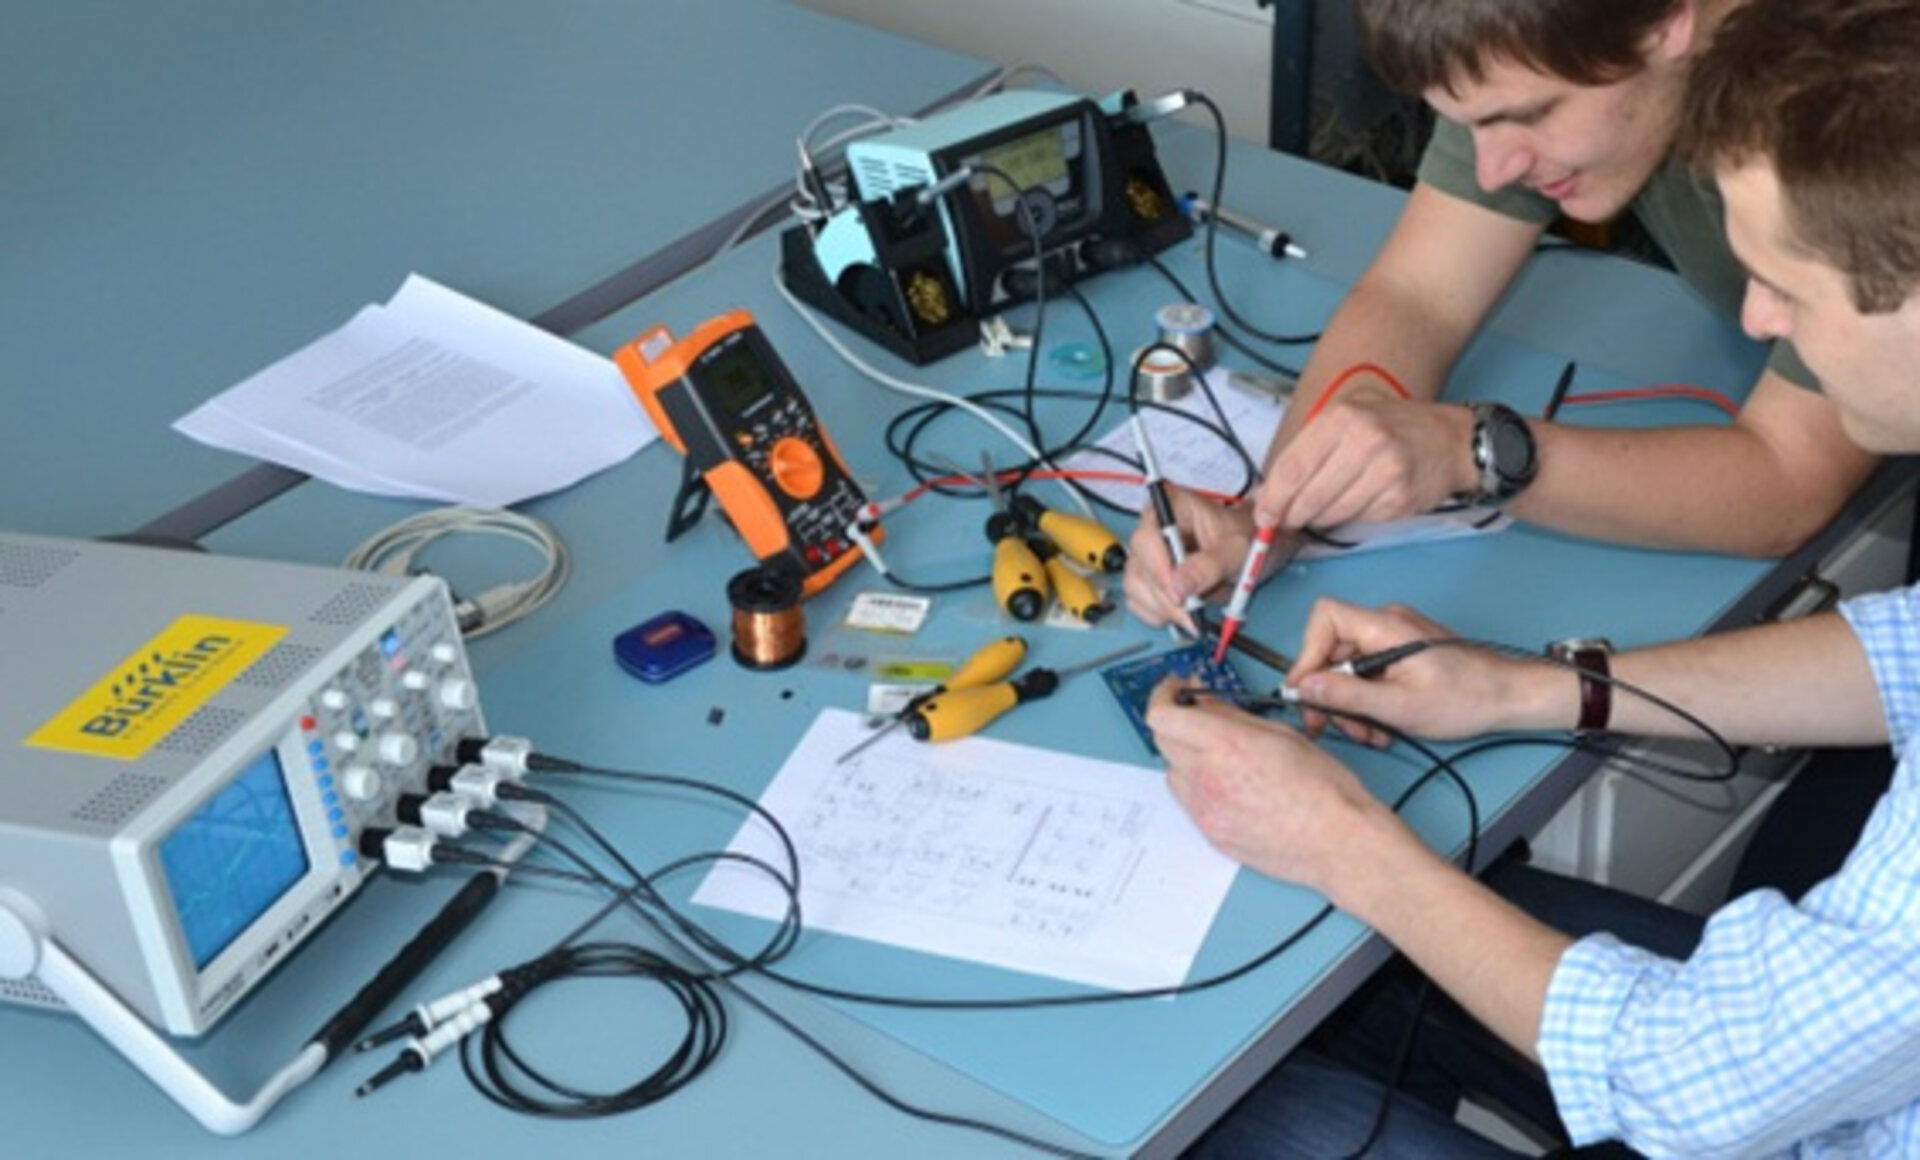 Students perform measurements on electronics hardware